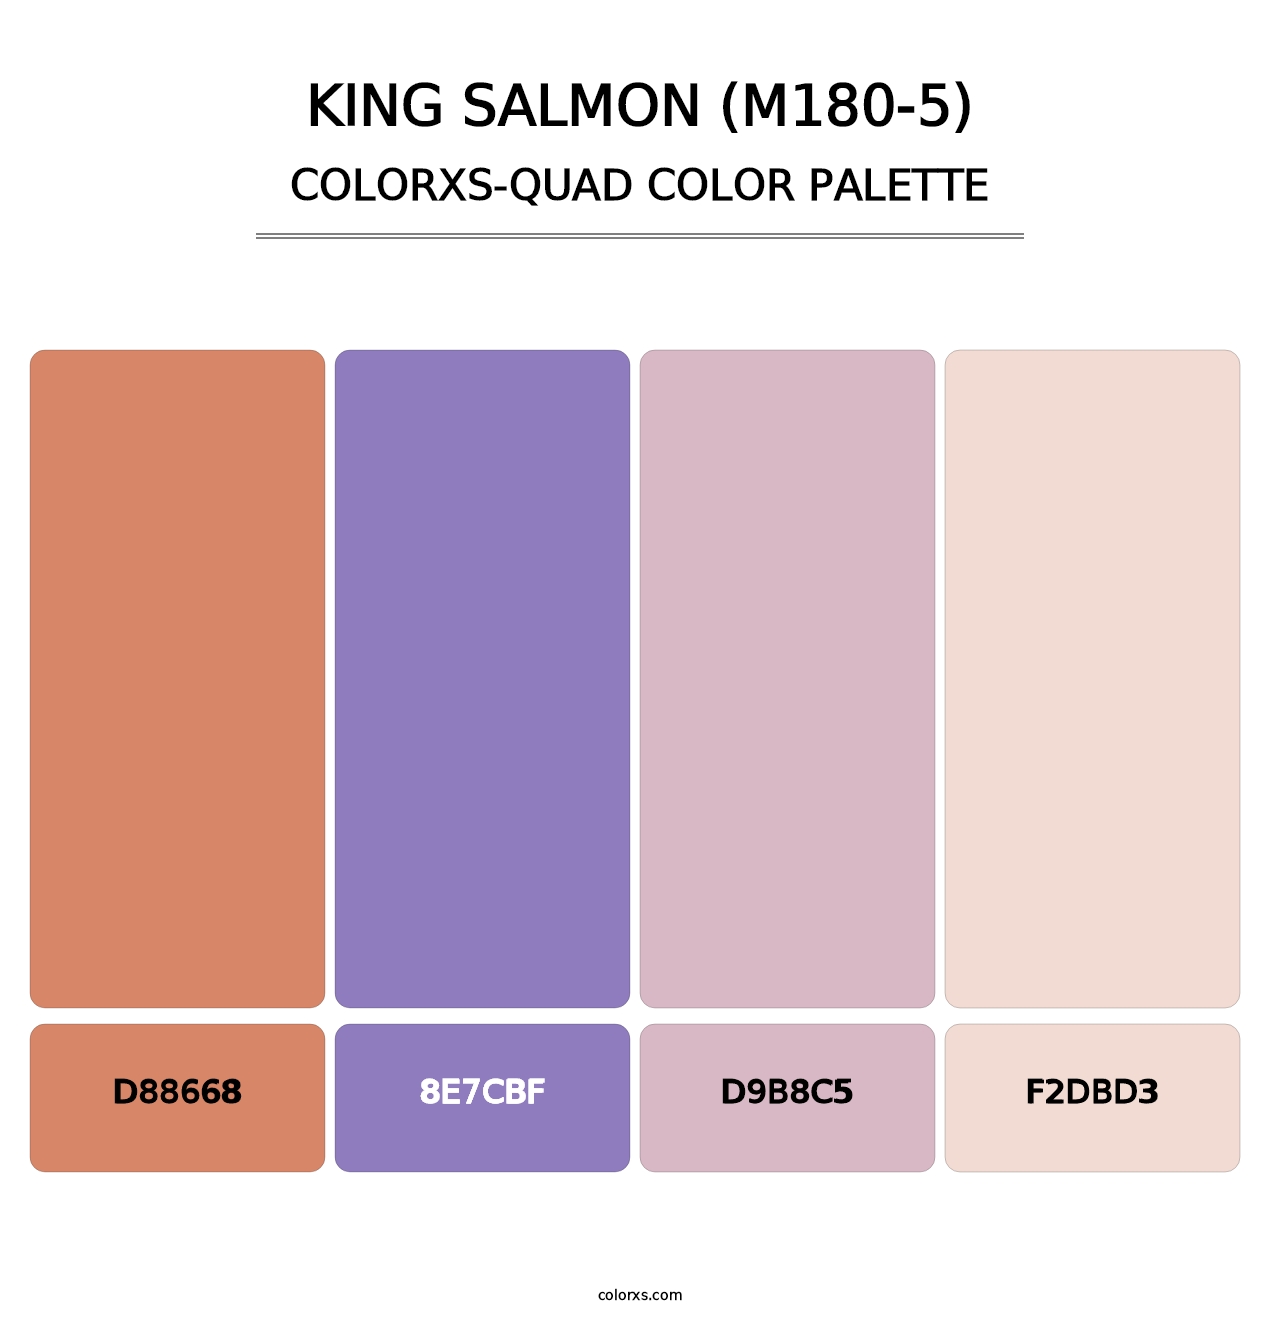 King Salmon (M180-5) - Colorxs Quad Palette